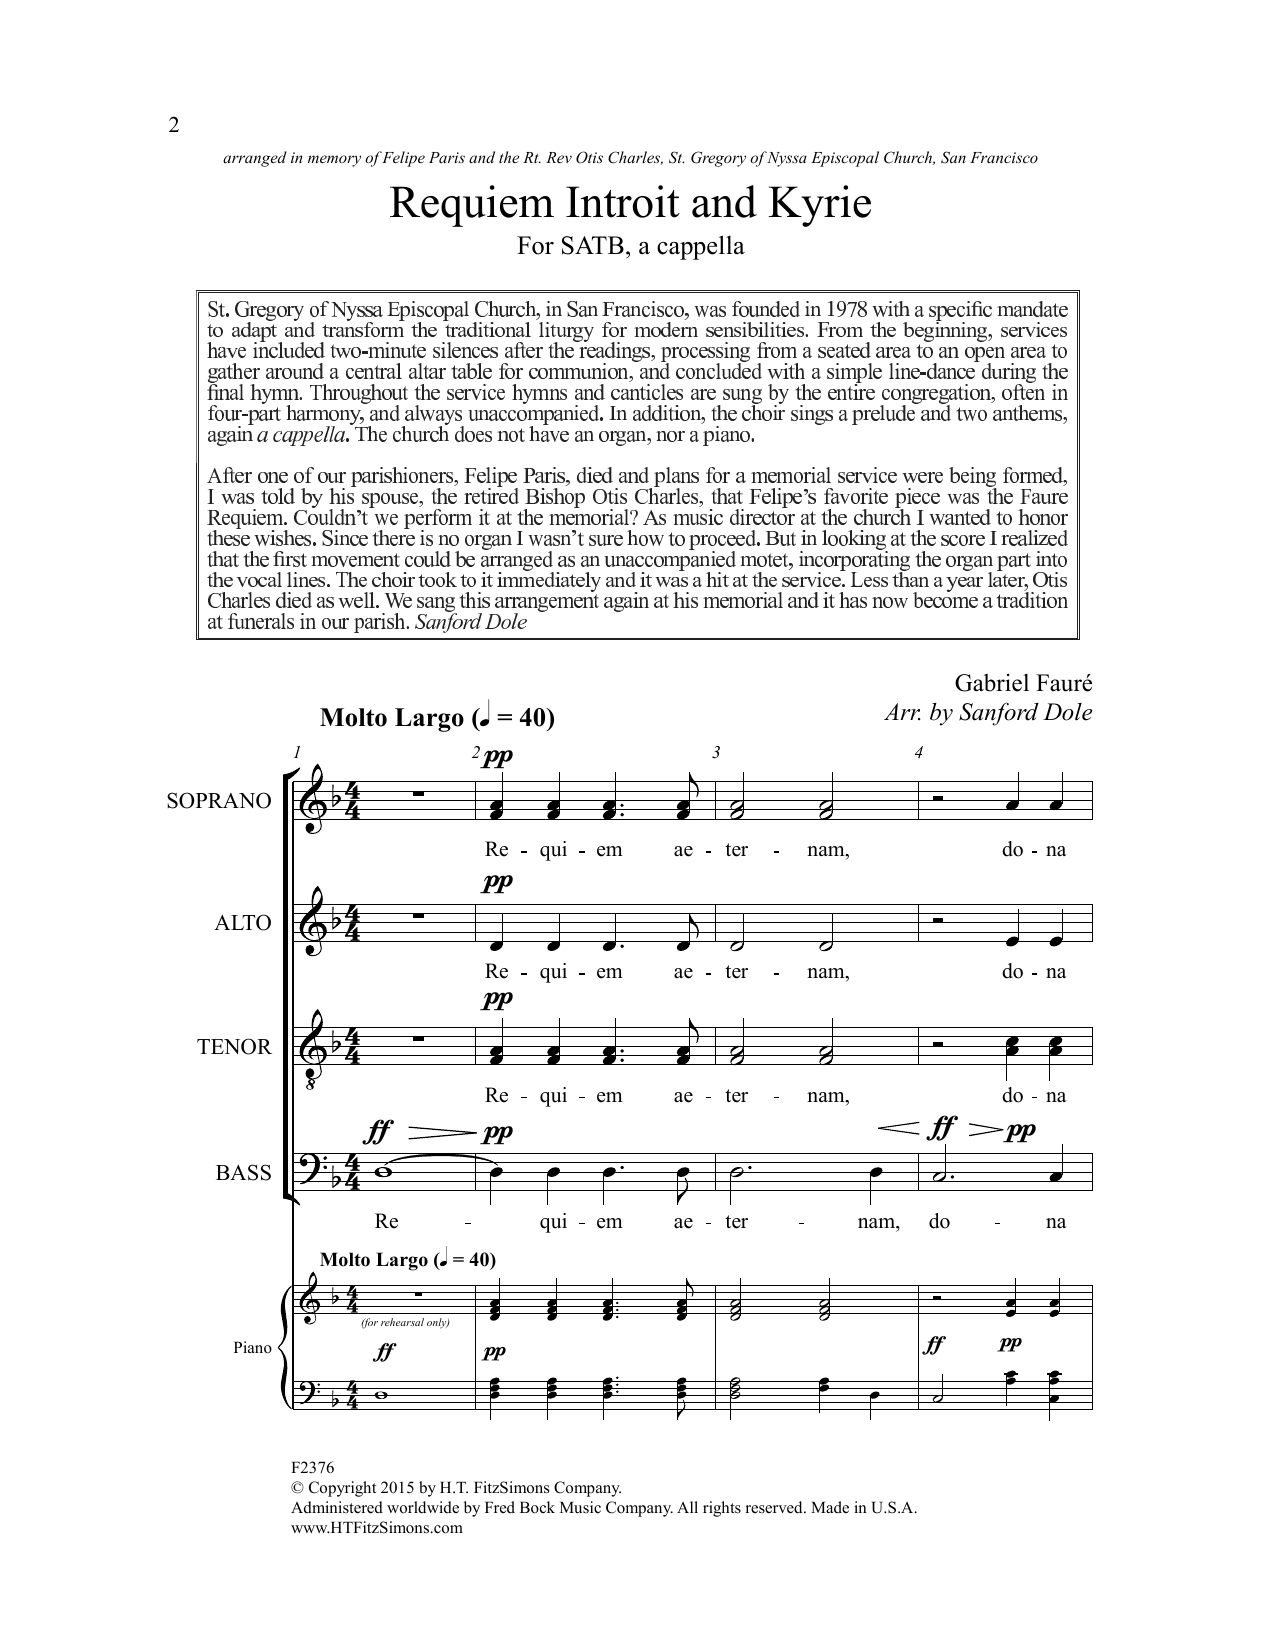 Gabriel Faure Requiem, Introit And Kyrie (arr. Sanford Dole) Sheet Music Notes & Chords for SATB Choir - Download or Print PDF